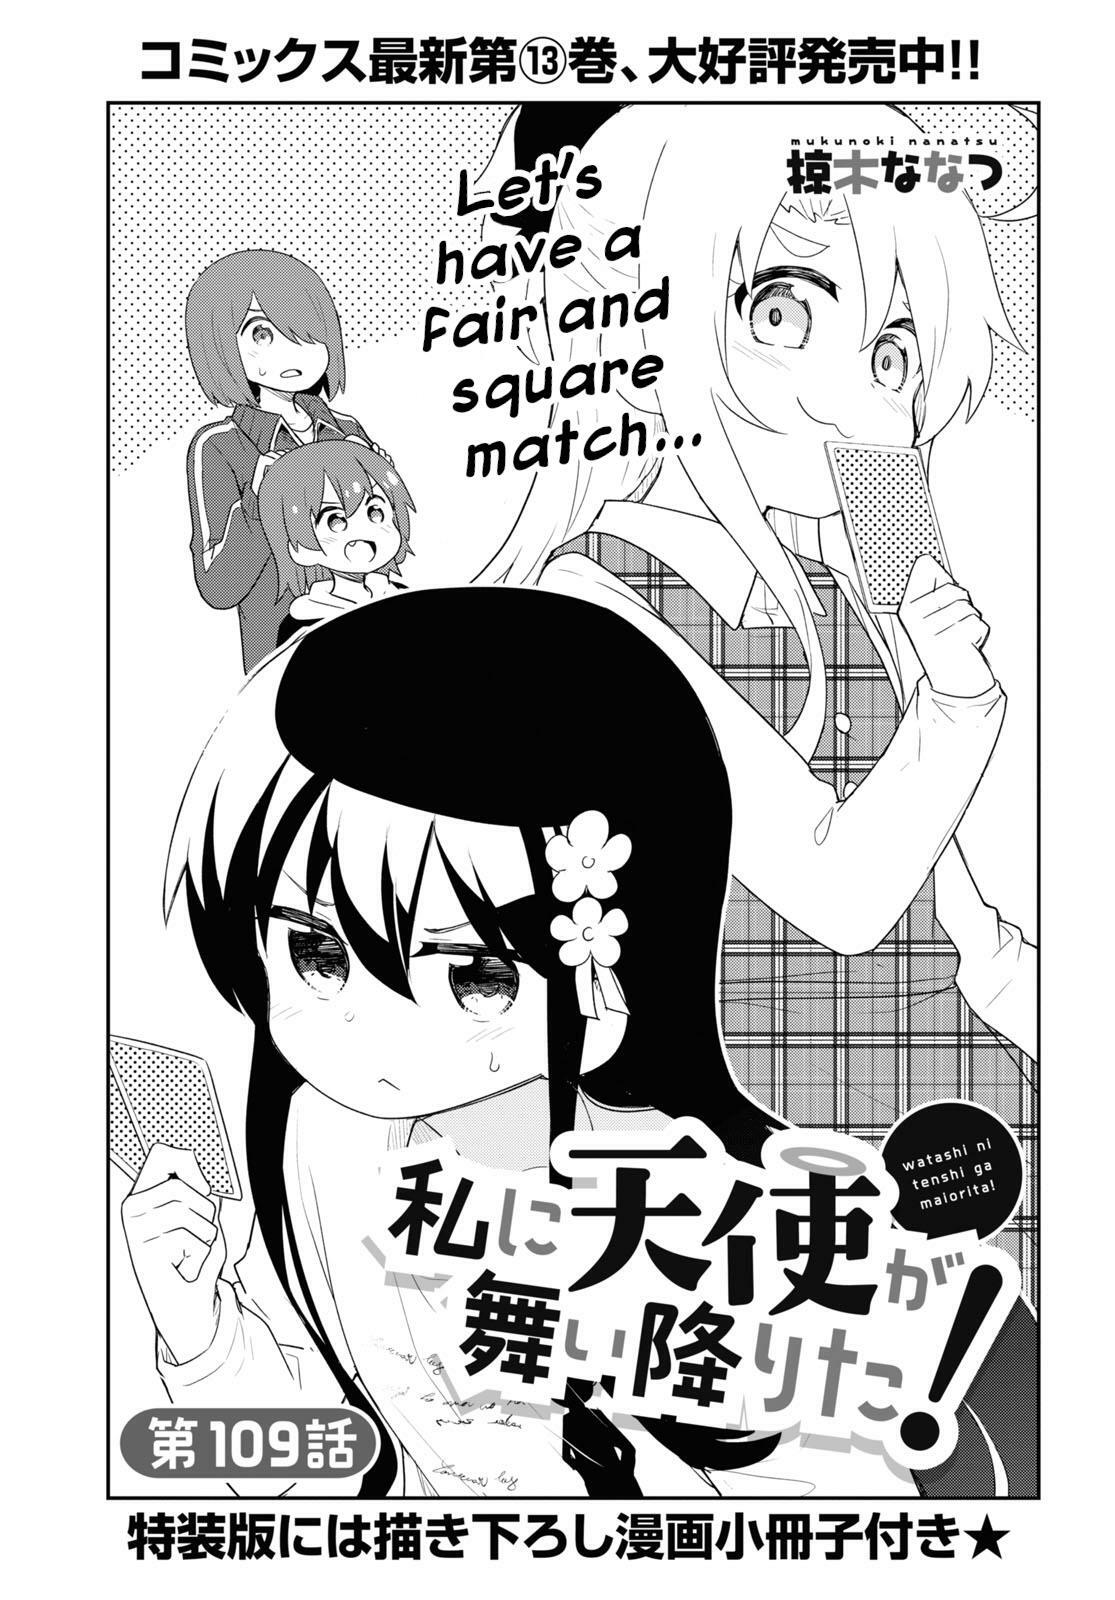 Read Watashi Ni Tenshi Ga Maiorita! Chapter 104 on Mangakakalot